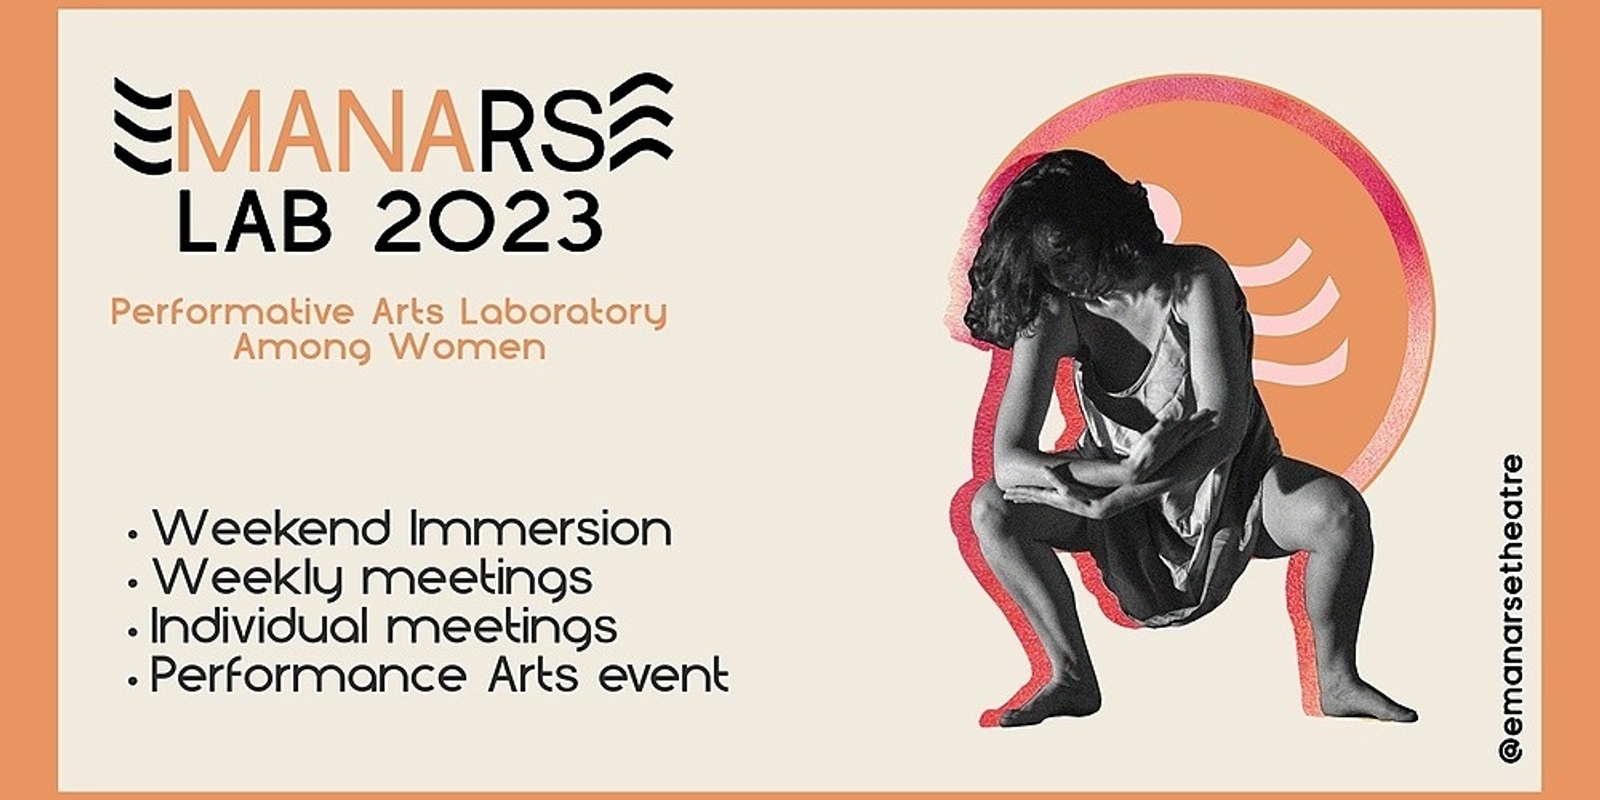 Banner image for Emanarse Lab 2023 - Performative Arts Laboratory Among Women